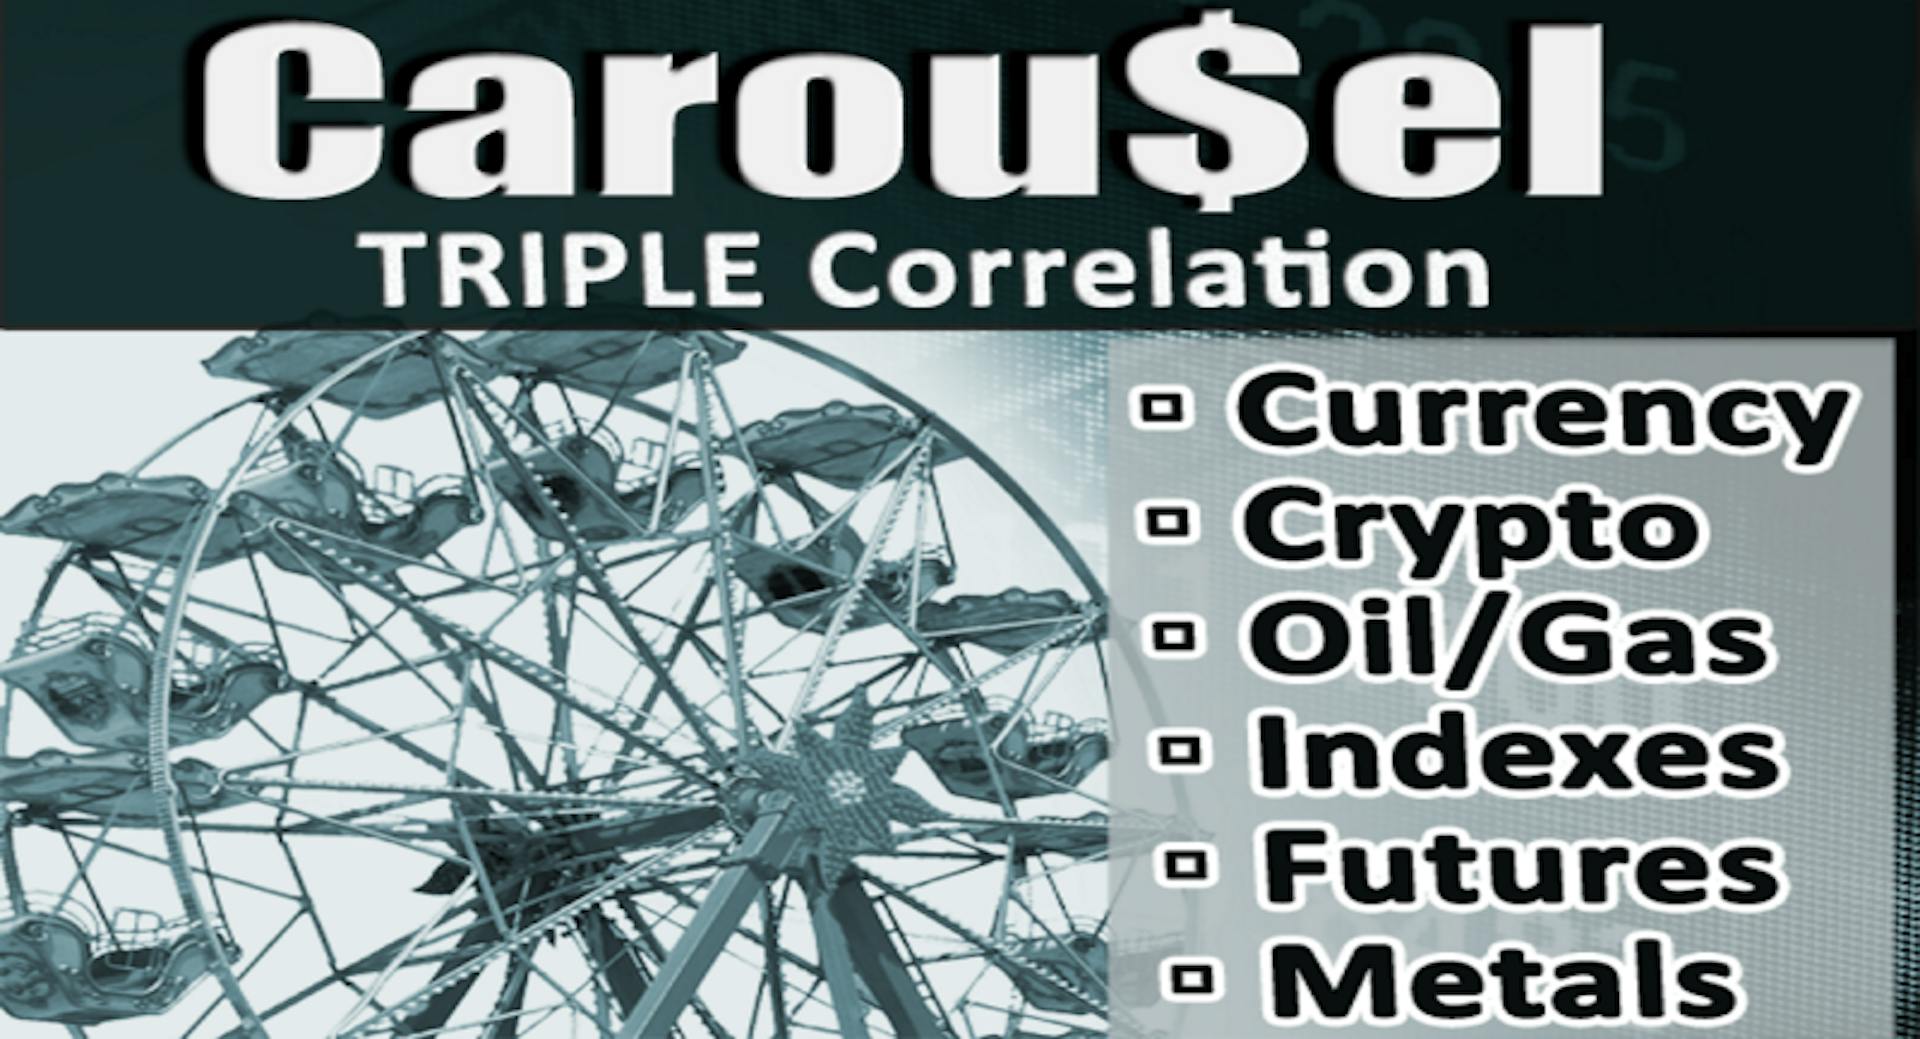 Caroousel Triple Correlation 